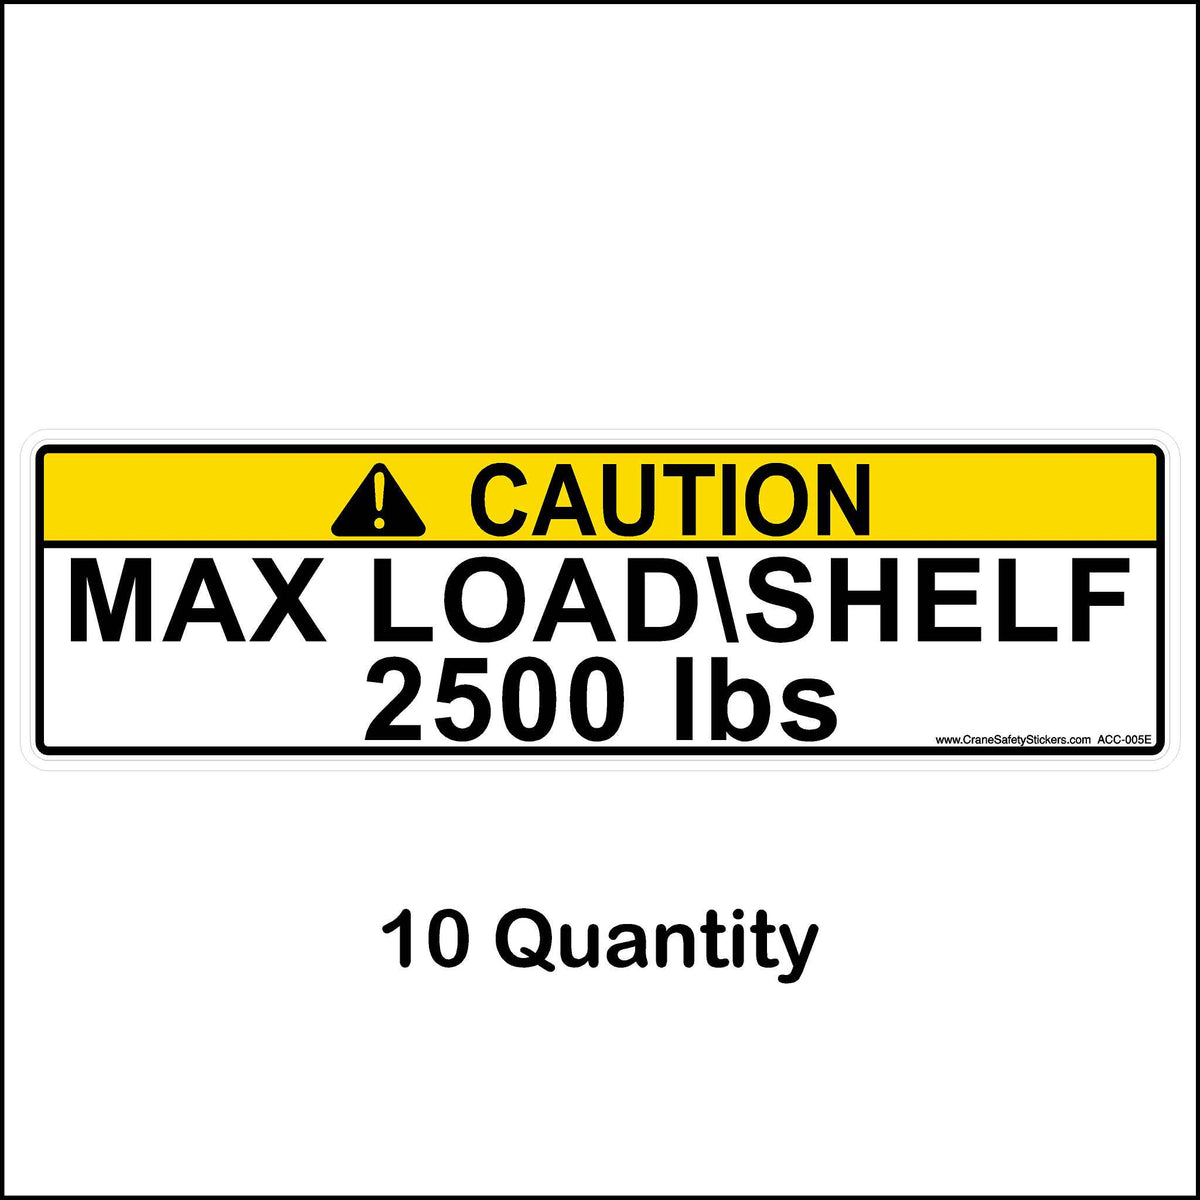 2500 lbs maximum load shelf pallet racking Label 10 quantity.